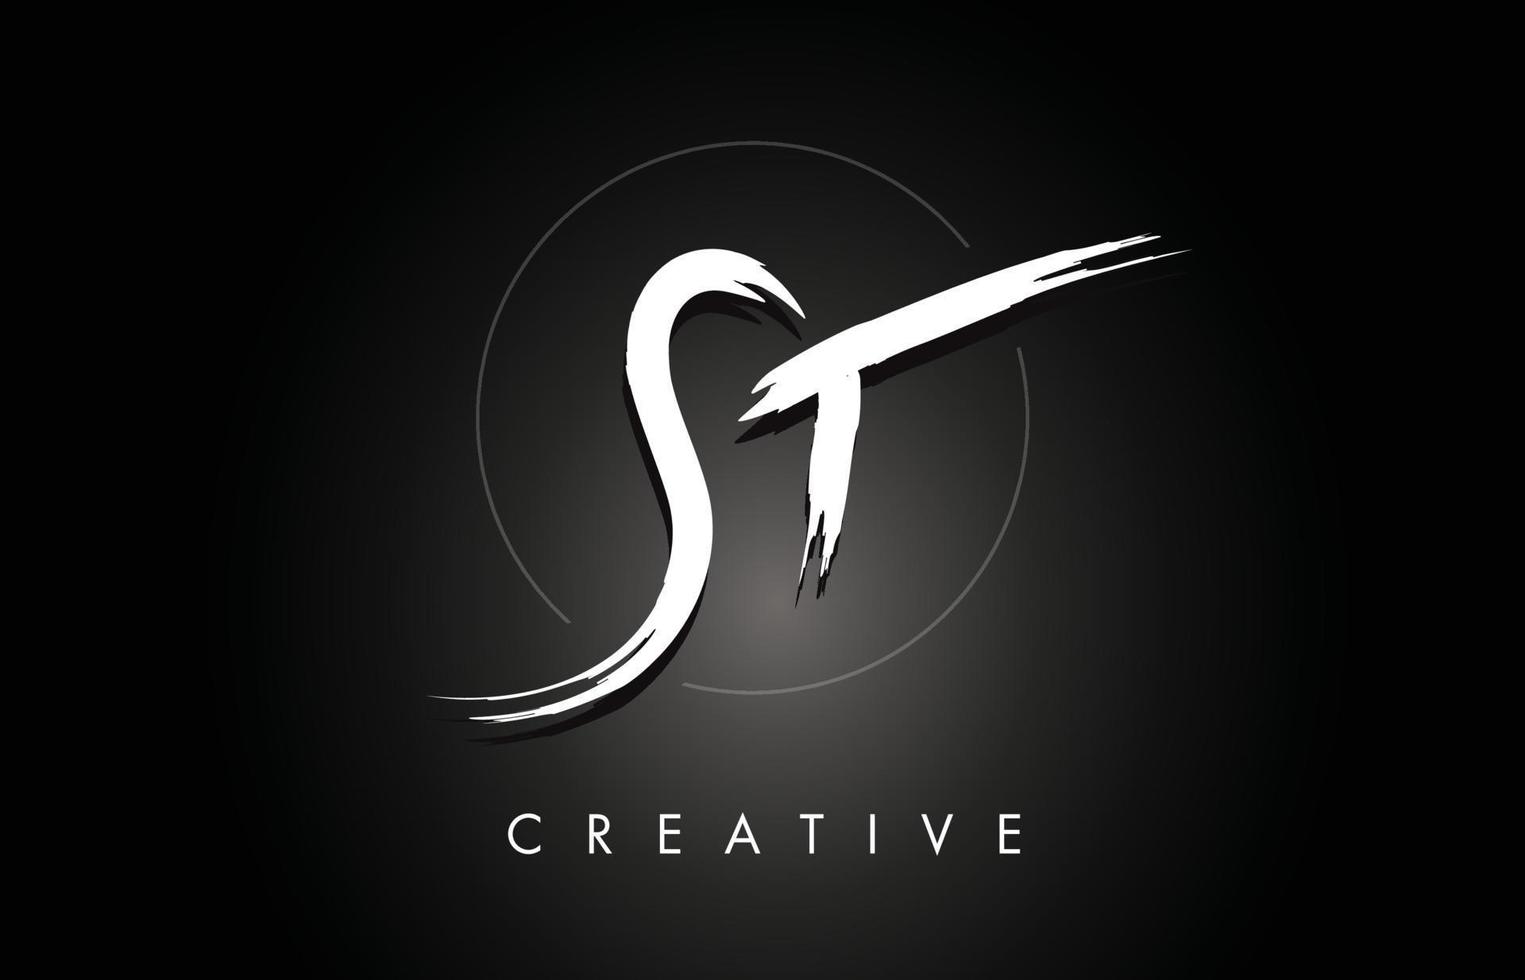 Projeto do logotipo da letra st st brushed com textura de brush lettering criativo e formato hexagonal vetor